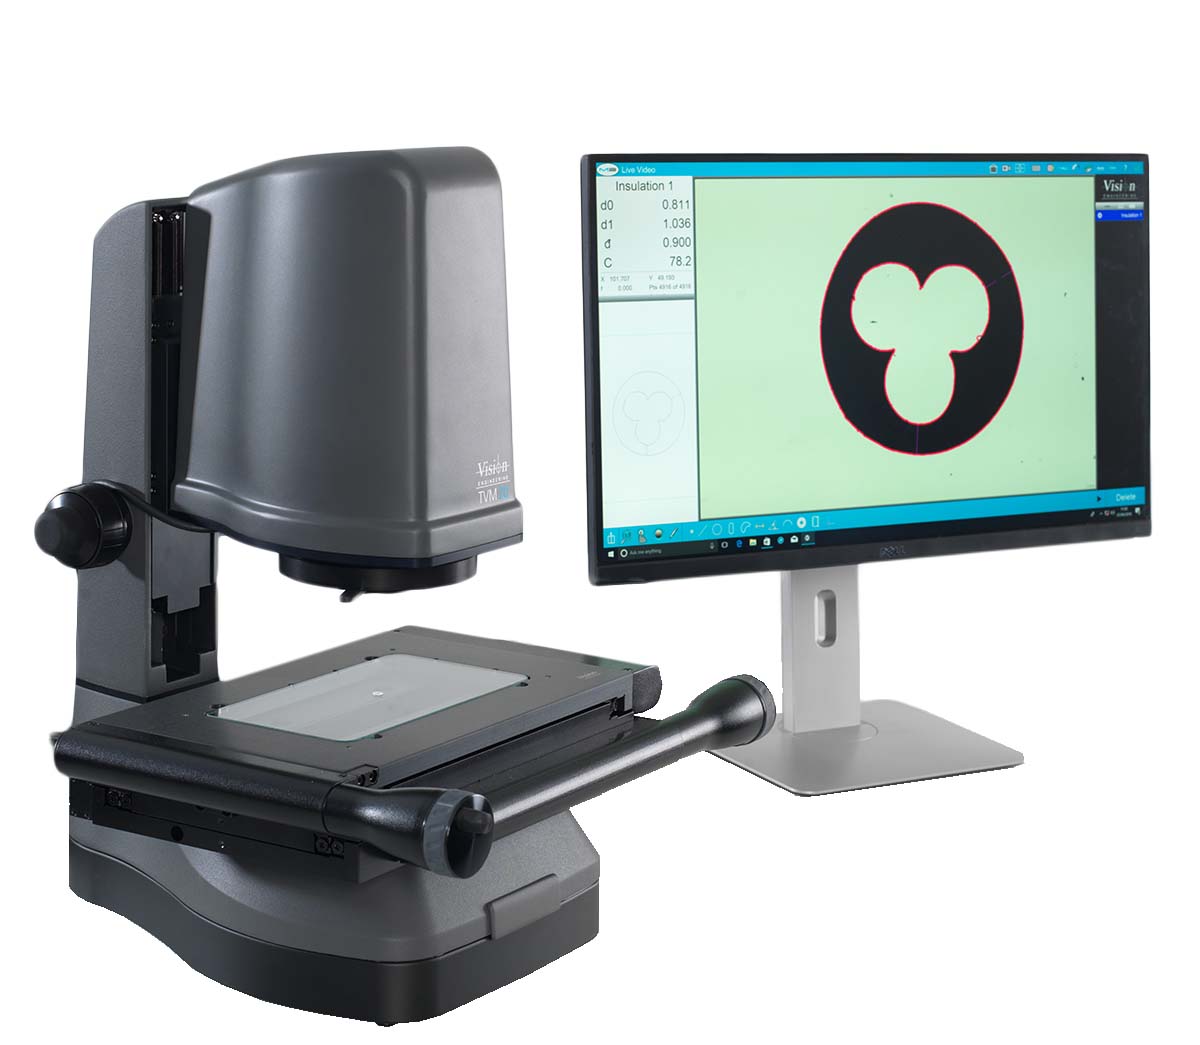 Hawk optical and video measurement microscope